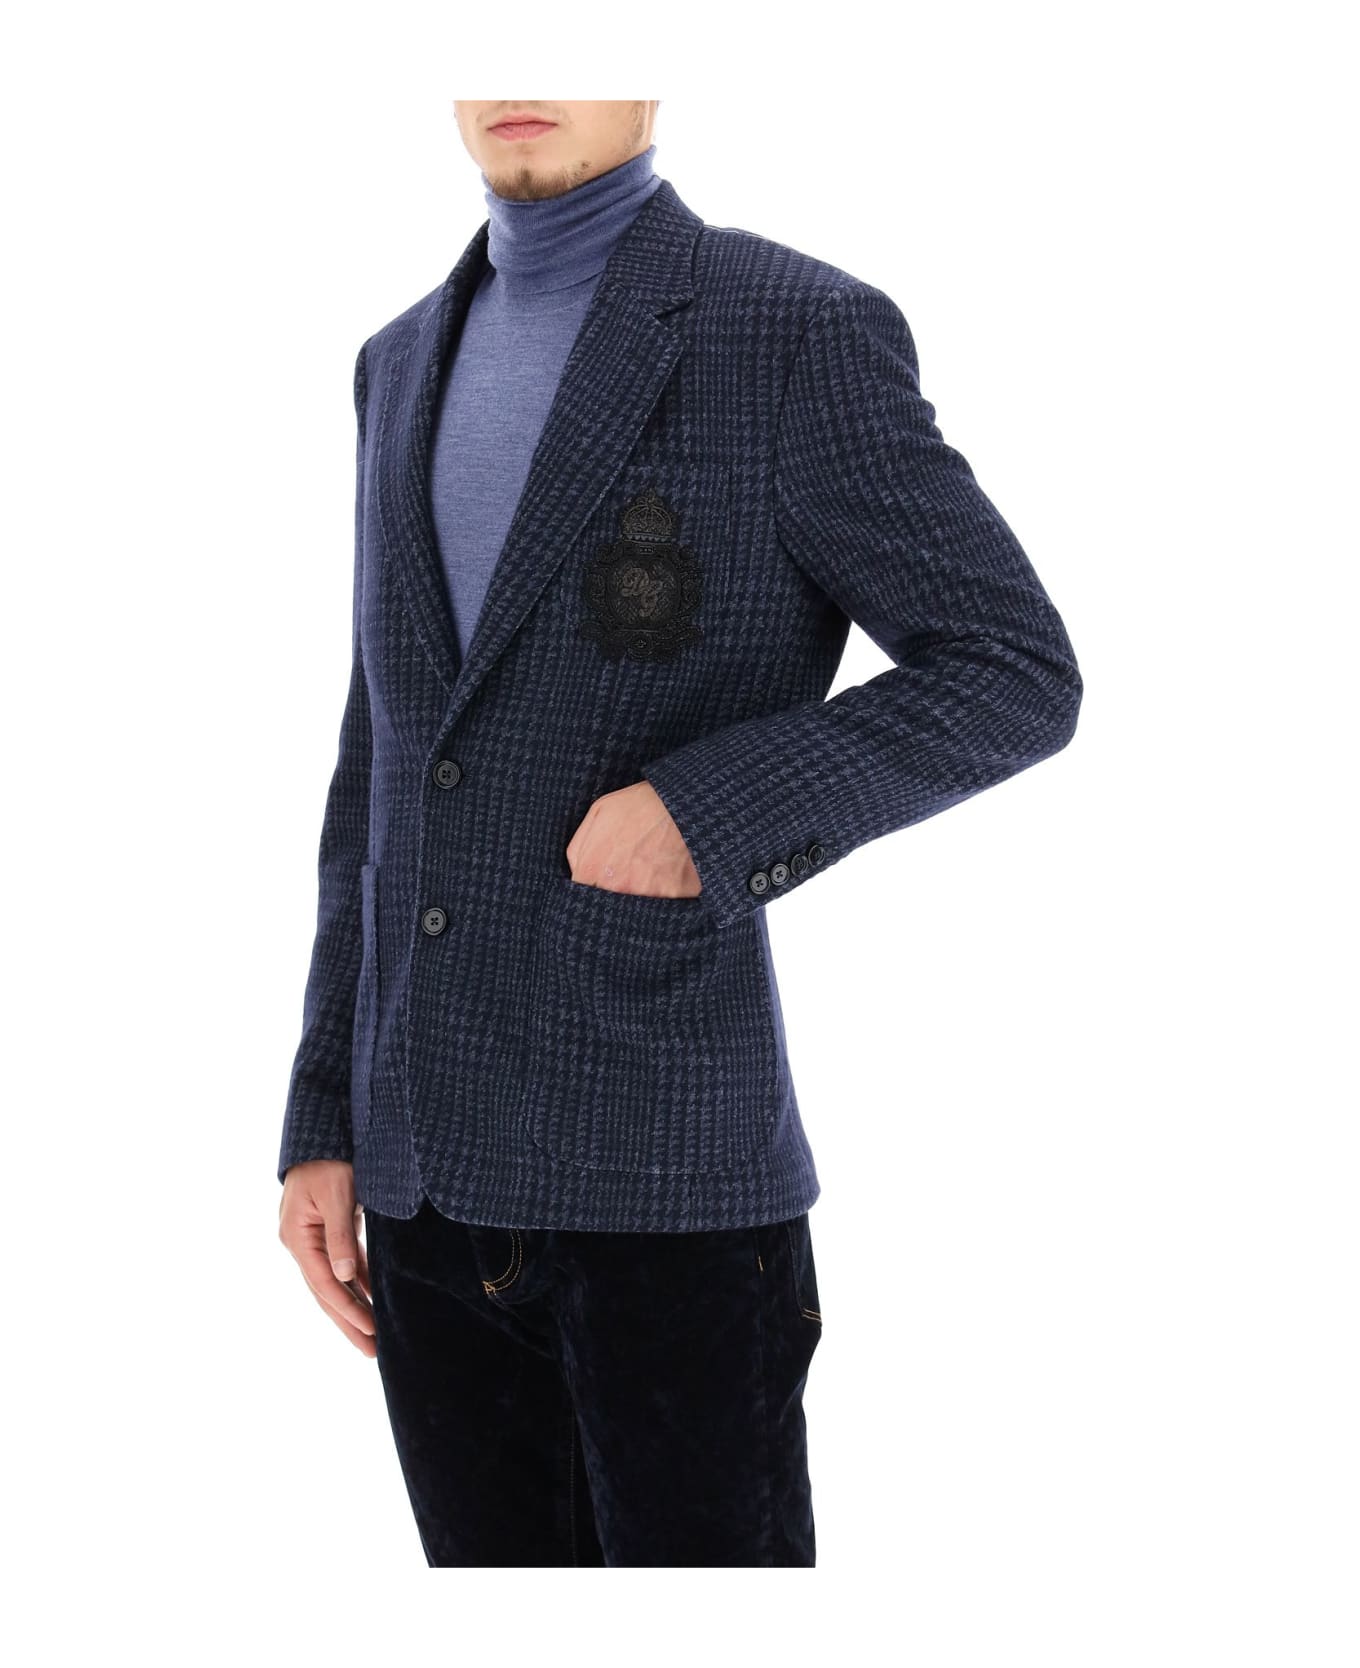 Dolce & Gabbana Tailored Blazer In Tartan Wool - Blu/grigio